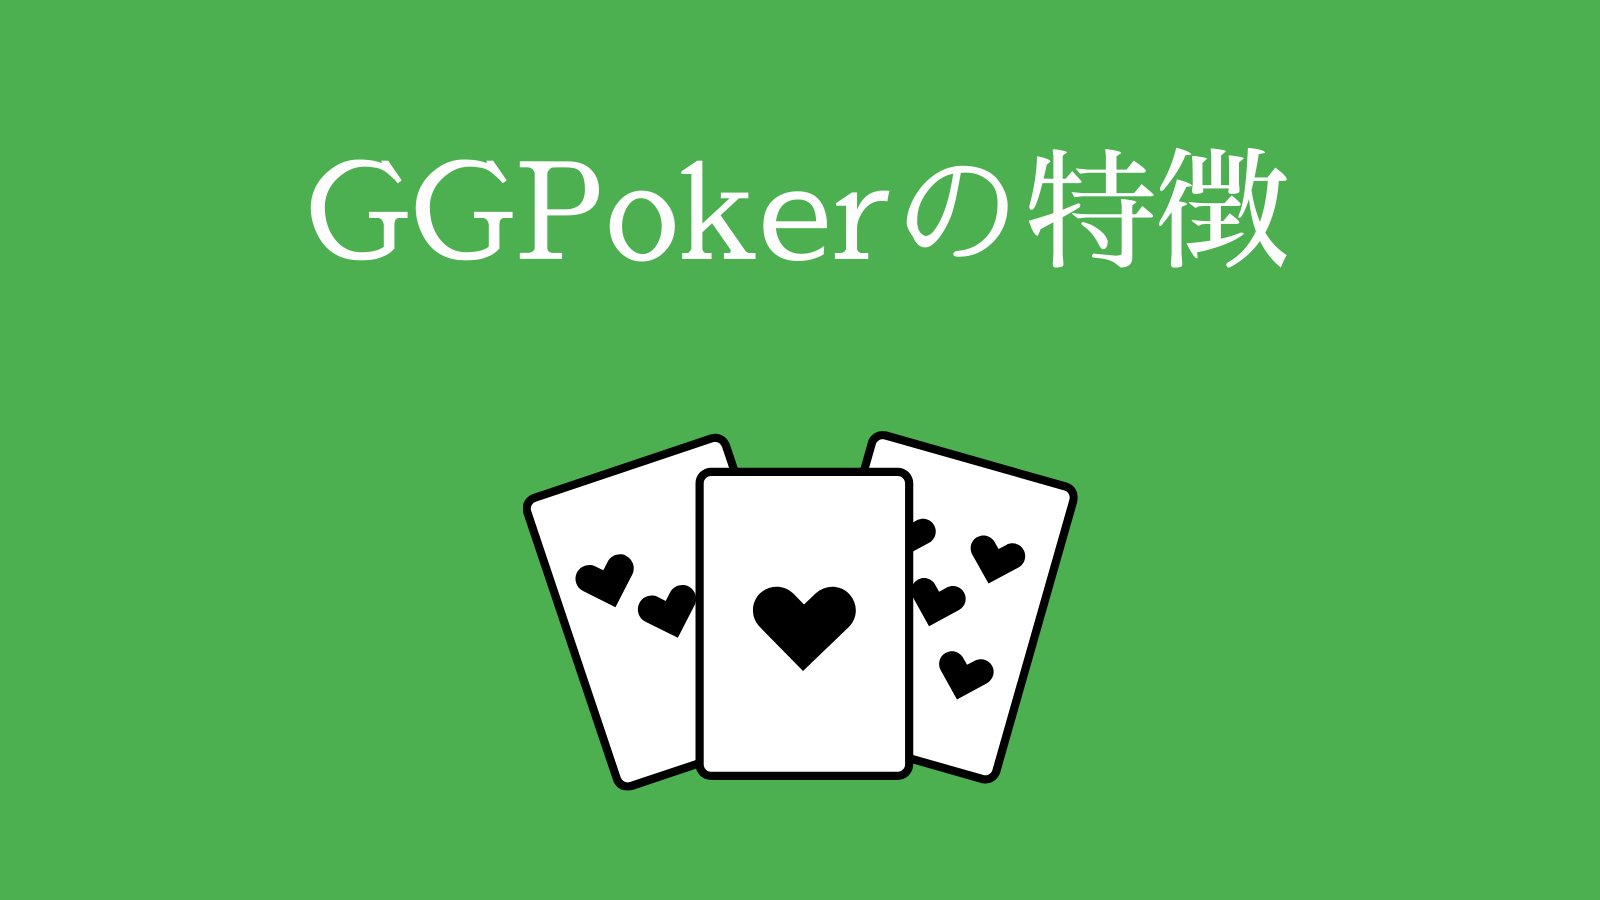 GGPokerの特徴